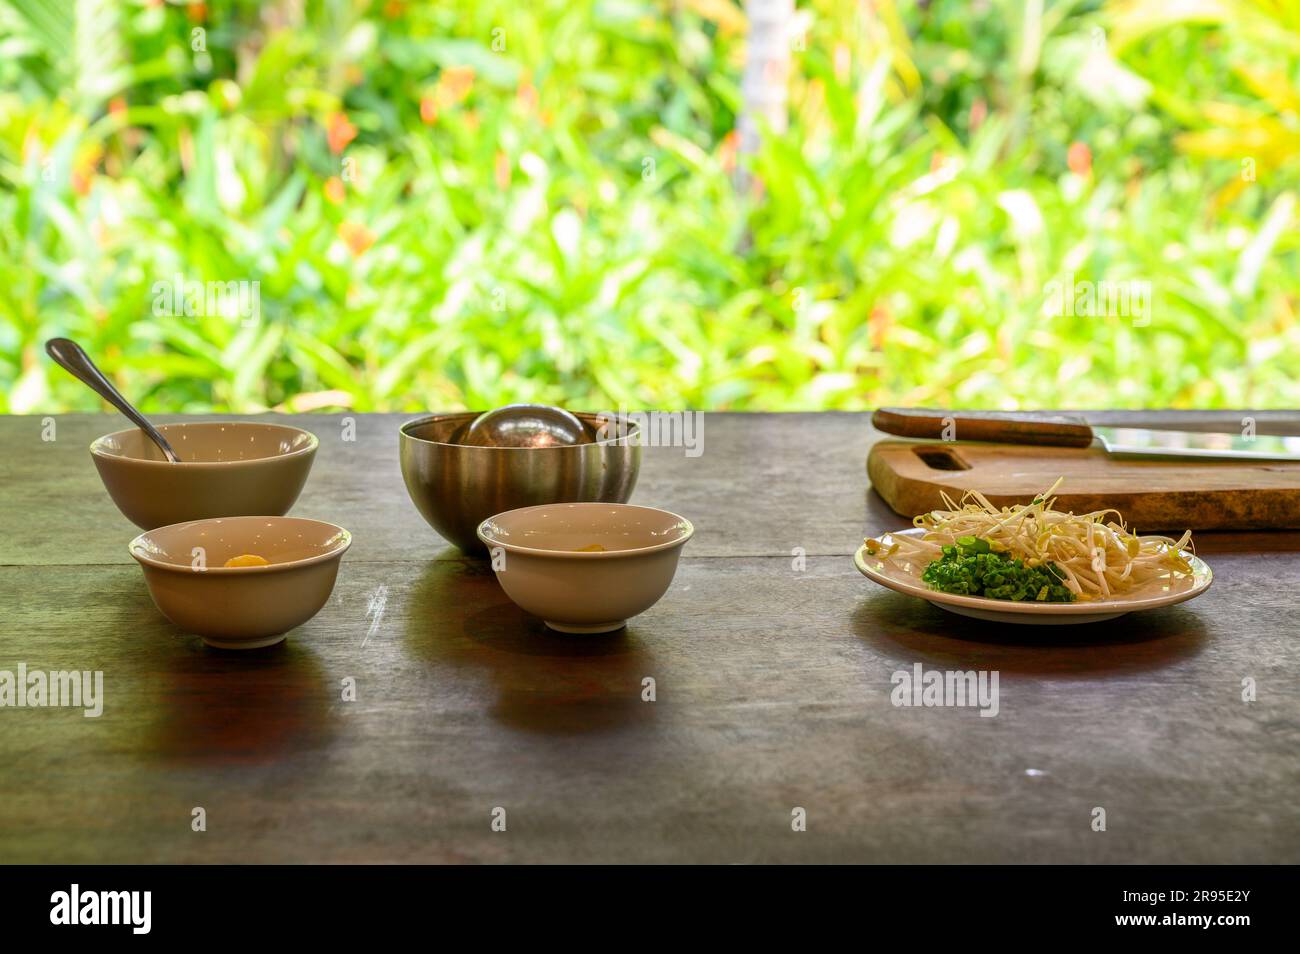 Ingredienti locali e utensili da cucina sono pronti per cucinare i pancake Hoi An presso la scuola di cucina Red Bridge, alla periferia di Hoi An, in Vietnam. Foto Stock